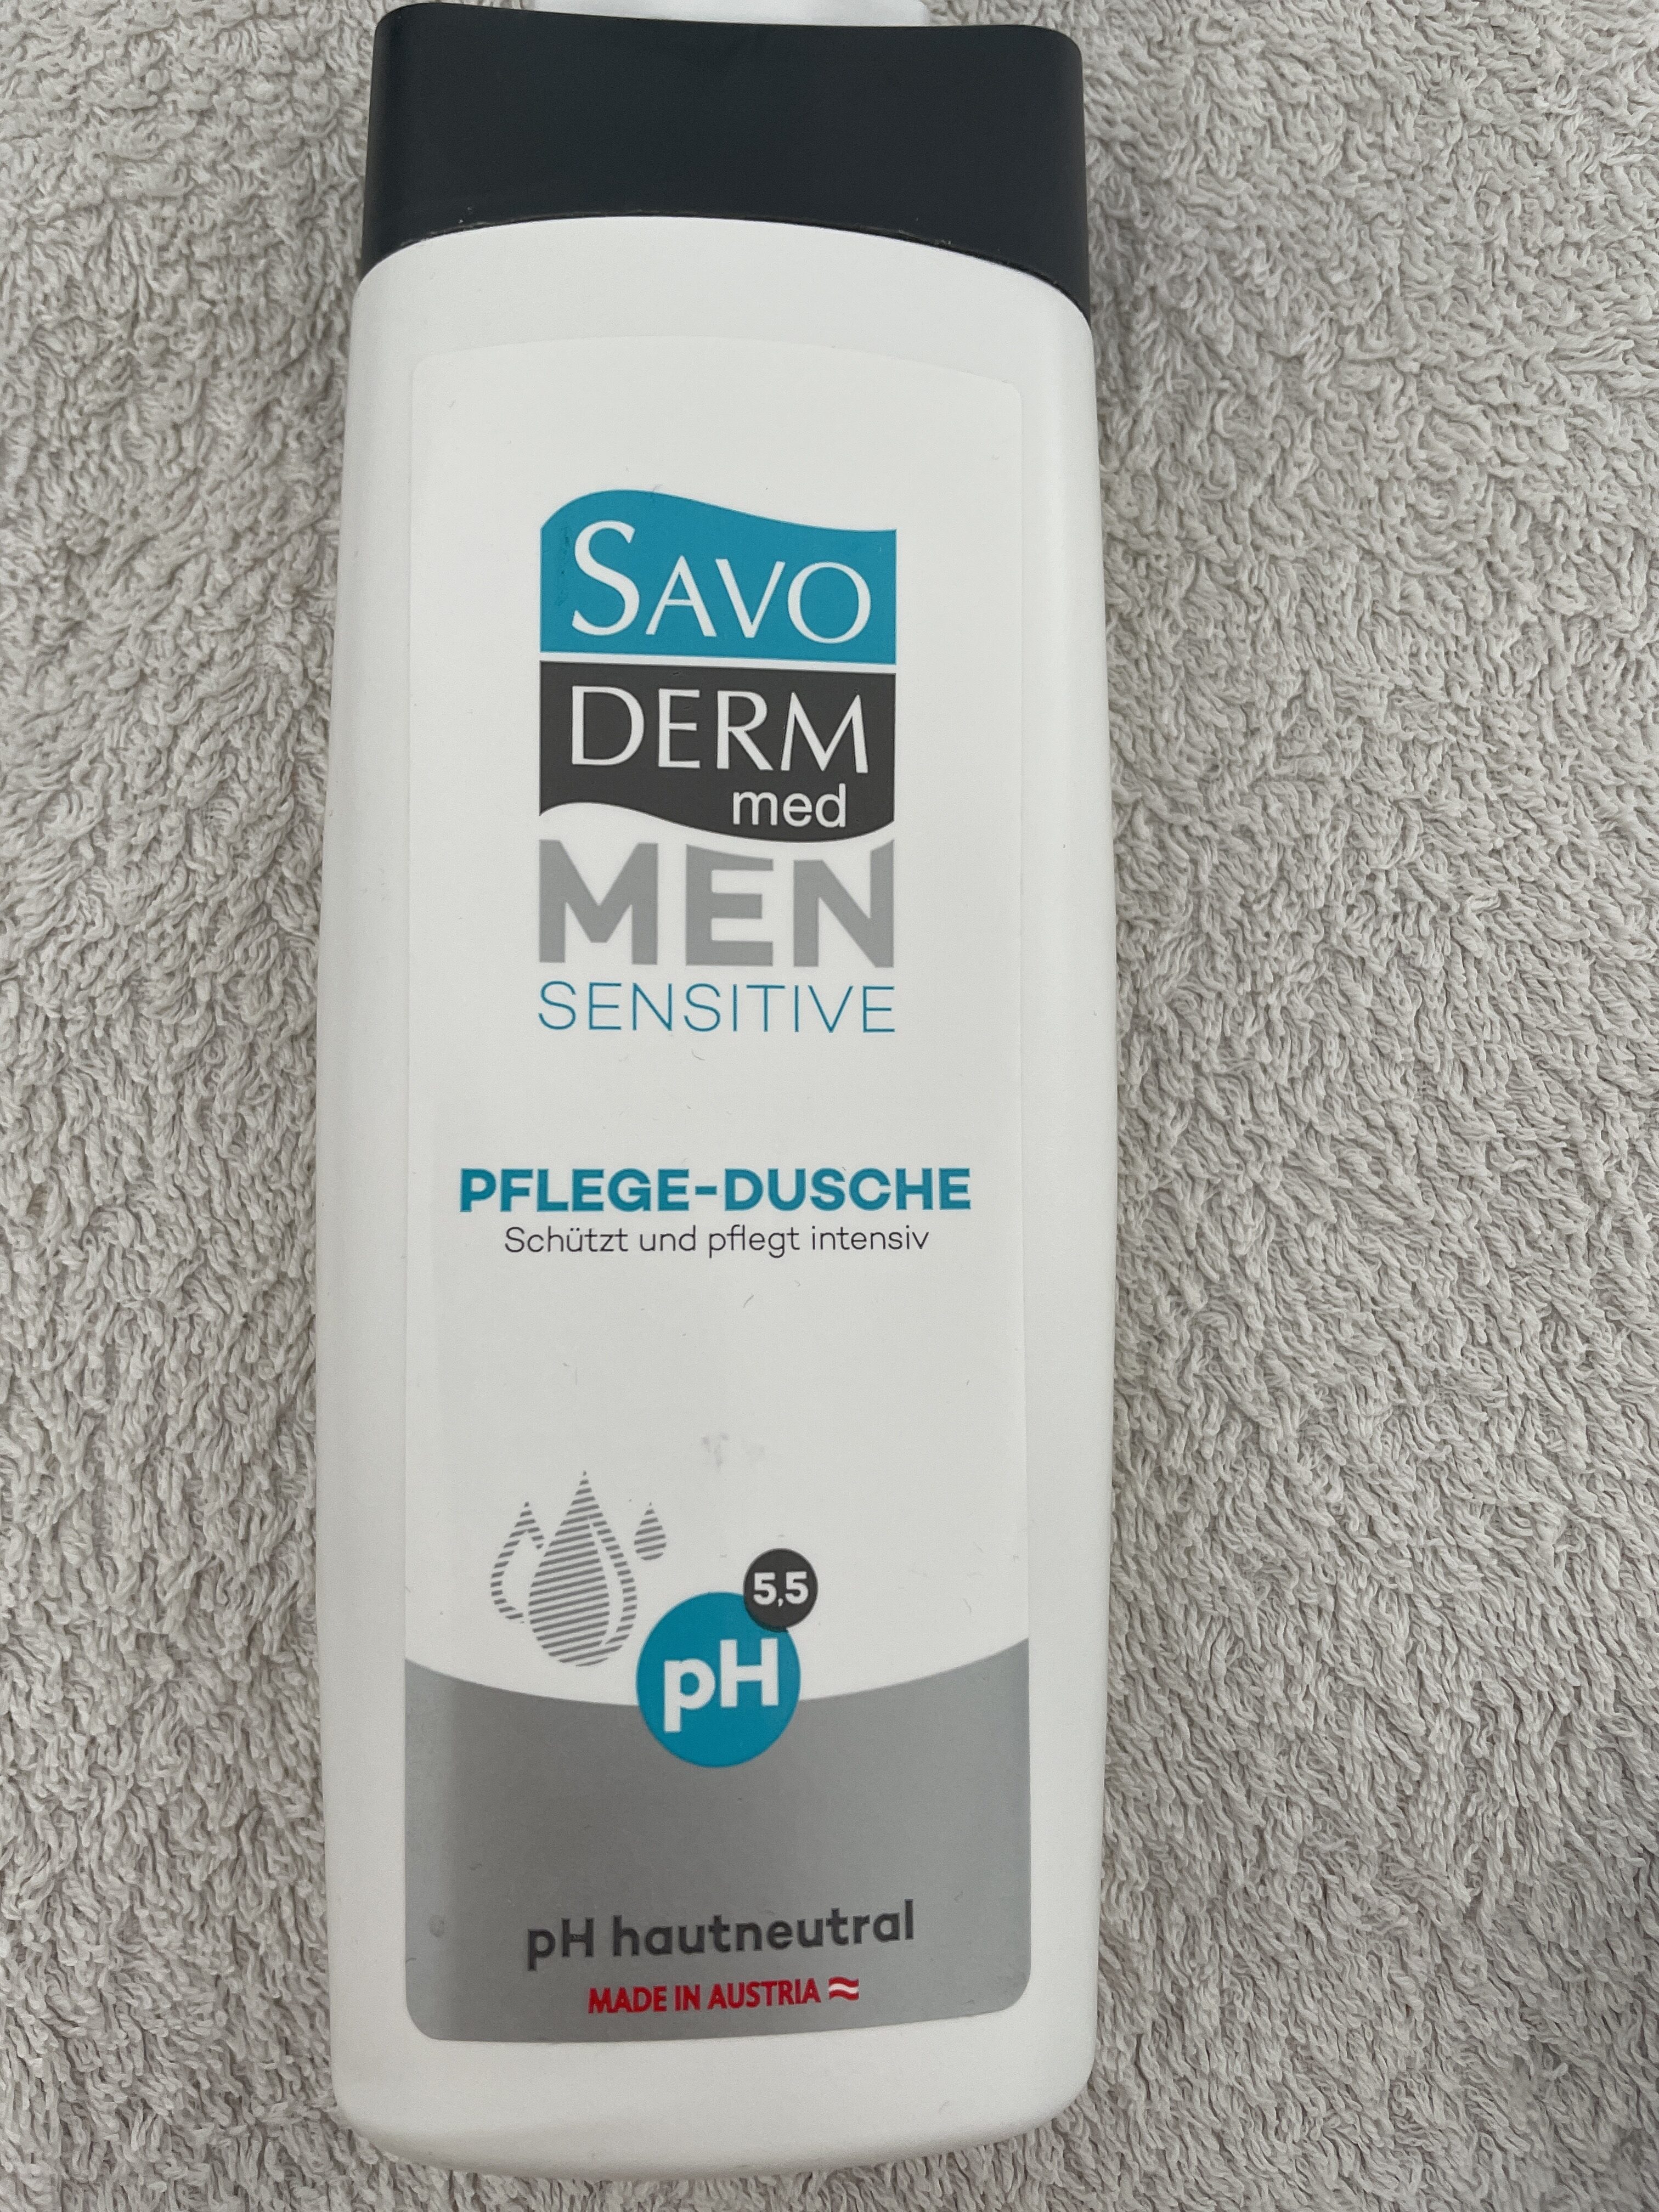 Men Sensitive Pflege-Dusche - Продукт - de